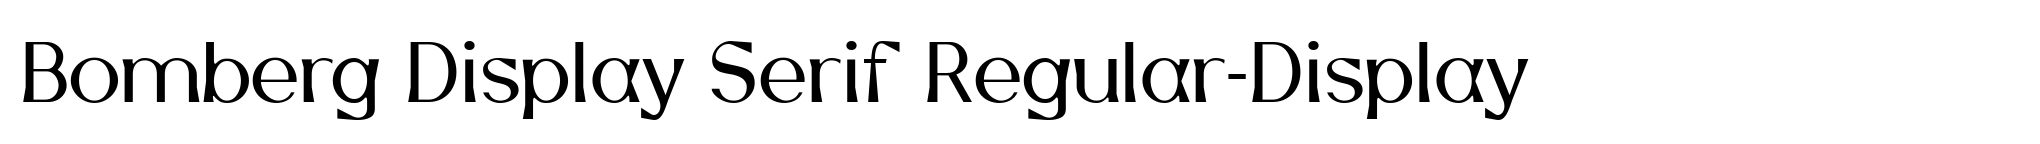 Bomberg Display Serif Regular-Display image